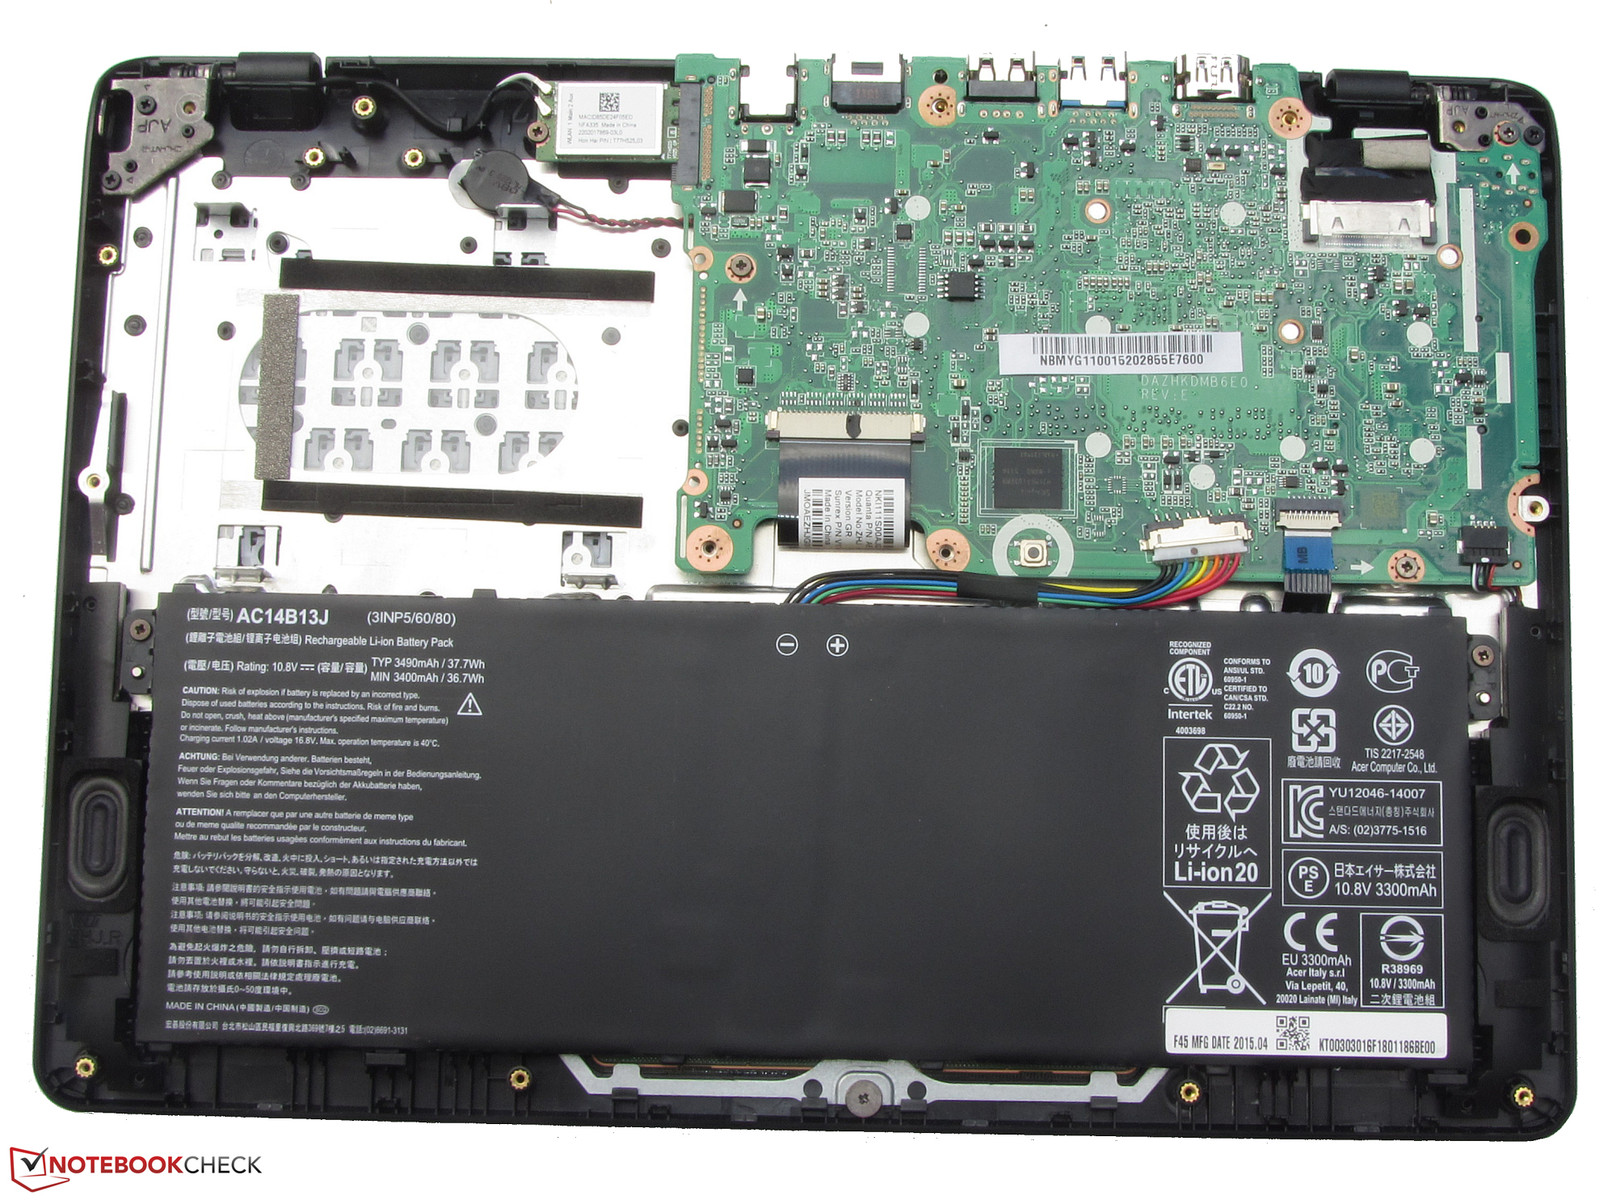 Acer Aspire ES1-131 Notebook Review - NotebookCheck.net Reviews